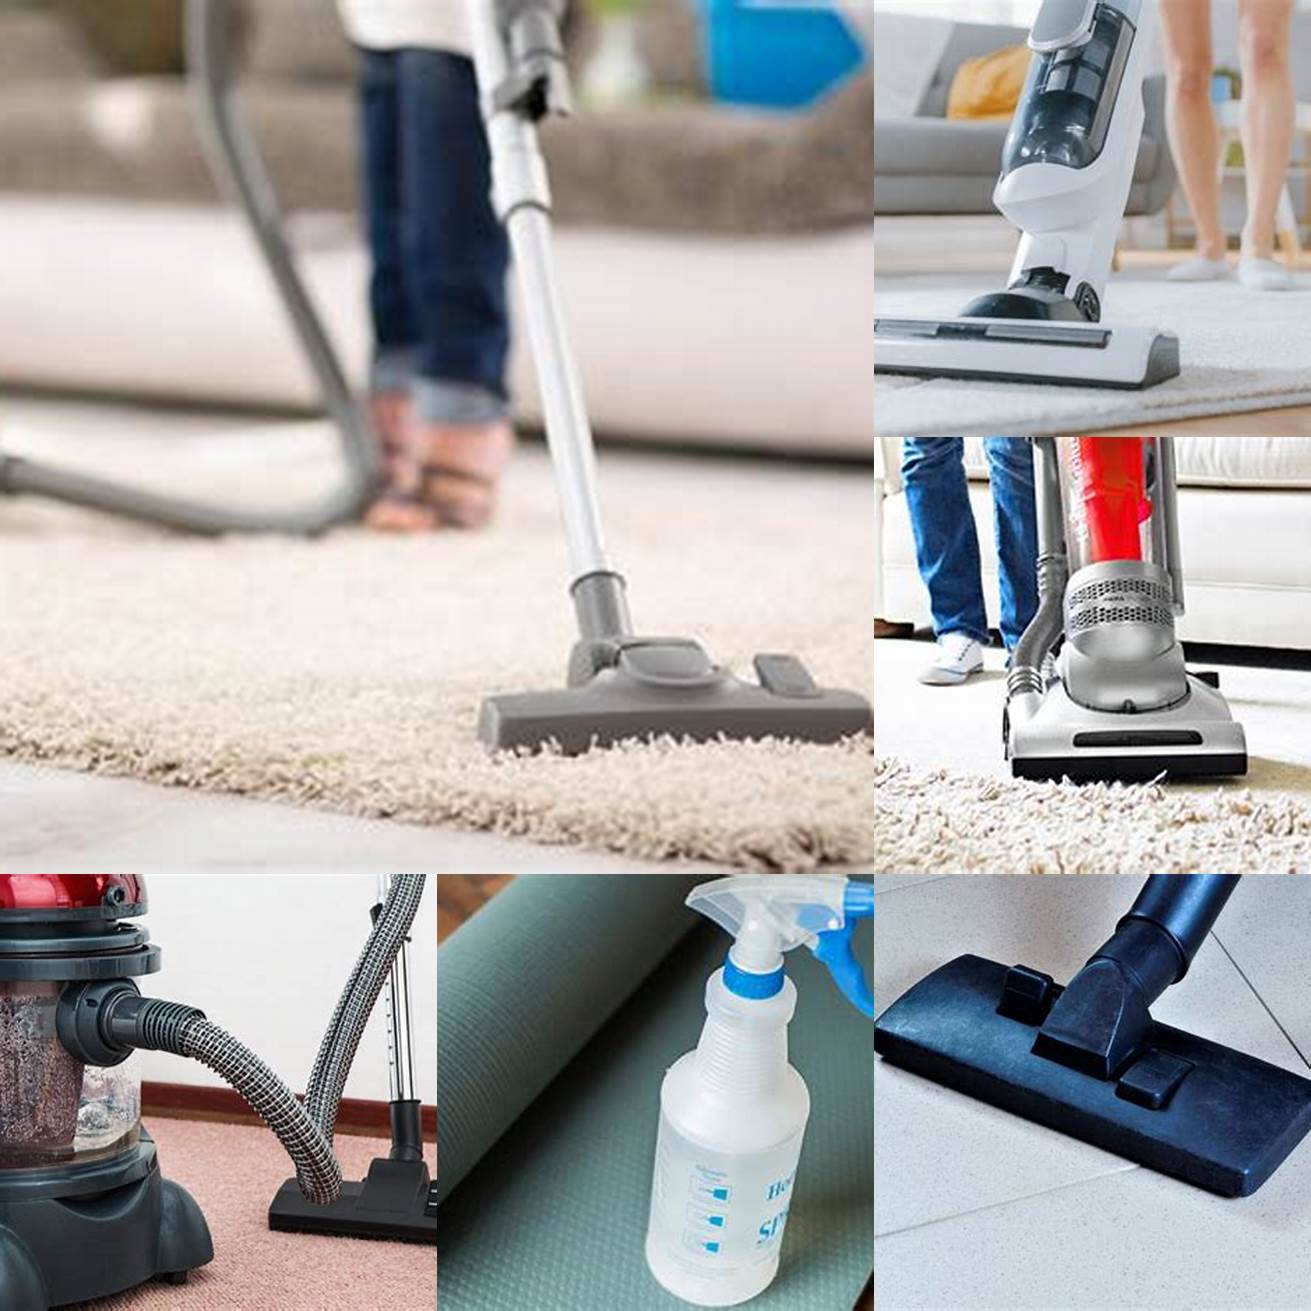 4 Vacuum the mat regularly to remove dirt and debris